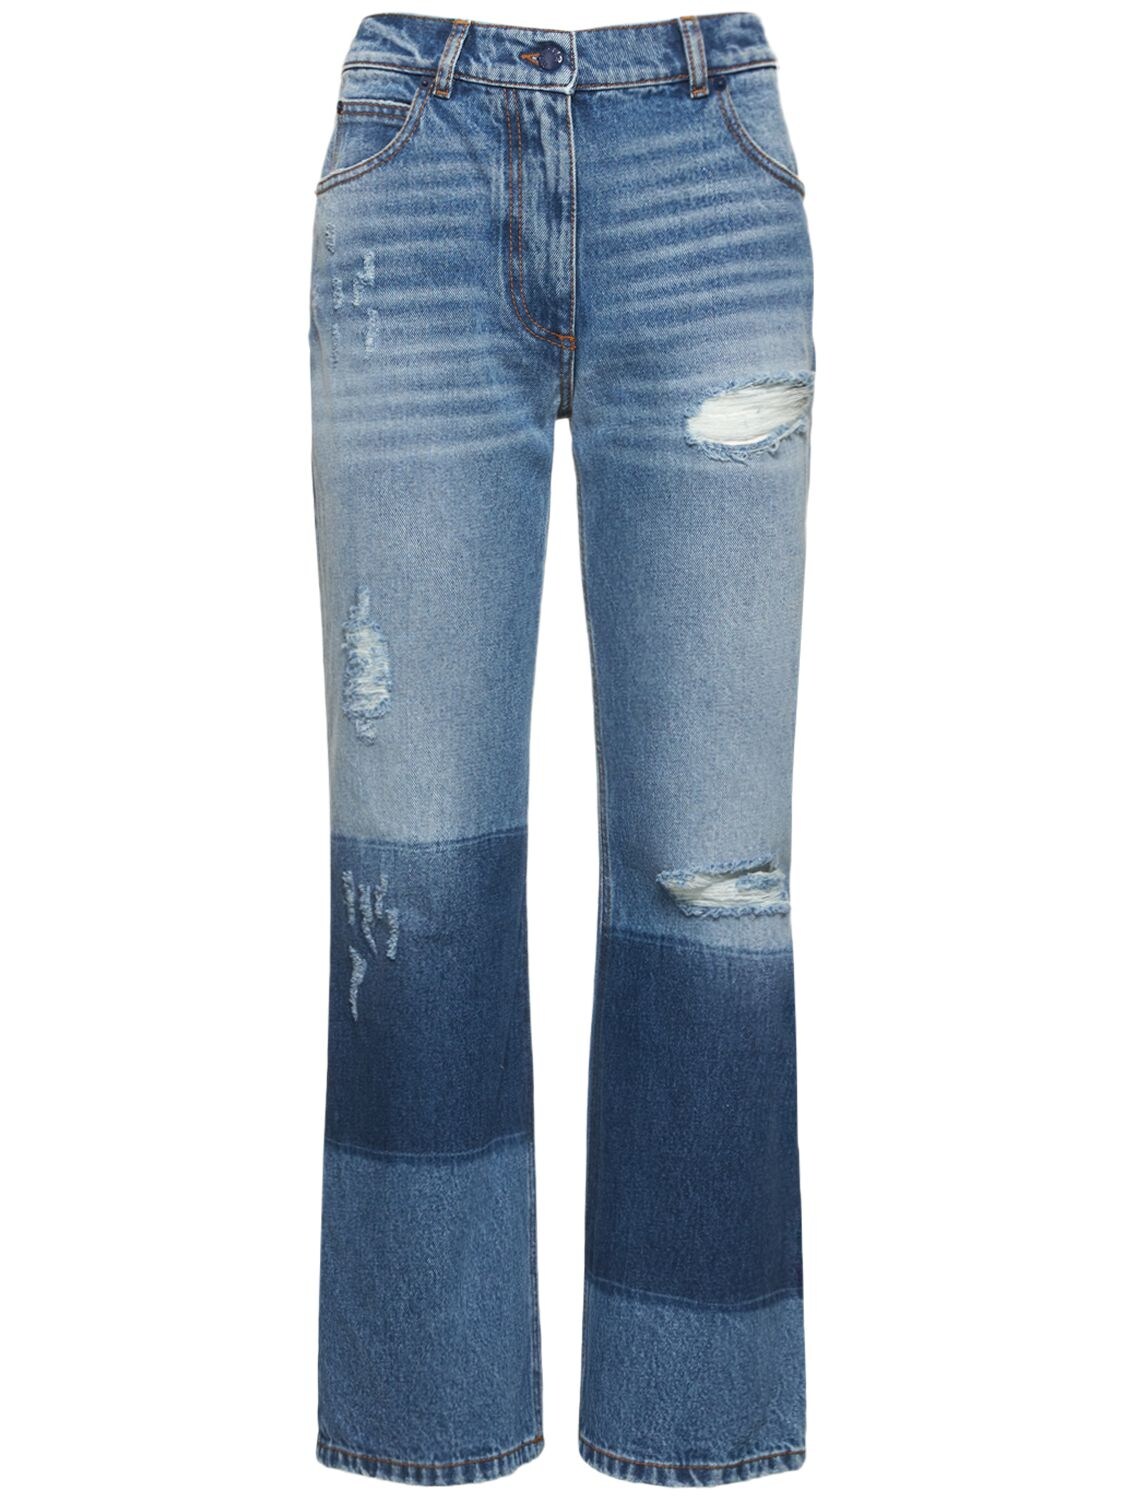 MONCLER GENIUS Star Intarsia Cotton Denim Jeans